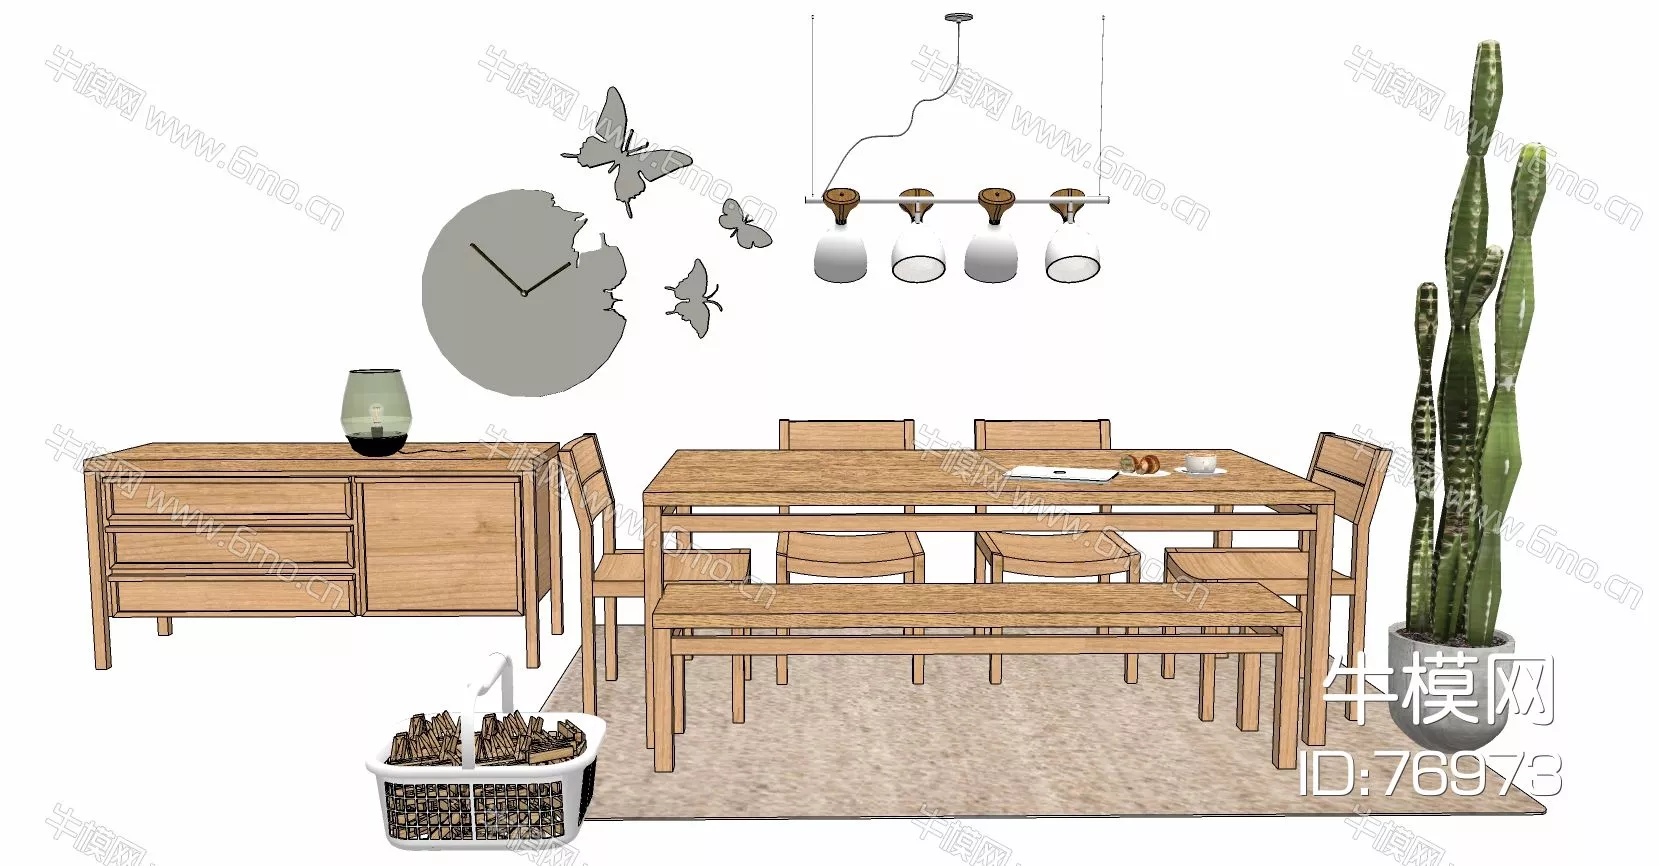 NORDIC DINING TABLE SET - SKETCHUP 3D MODEL - ENSCAPE - 76973